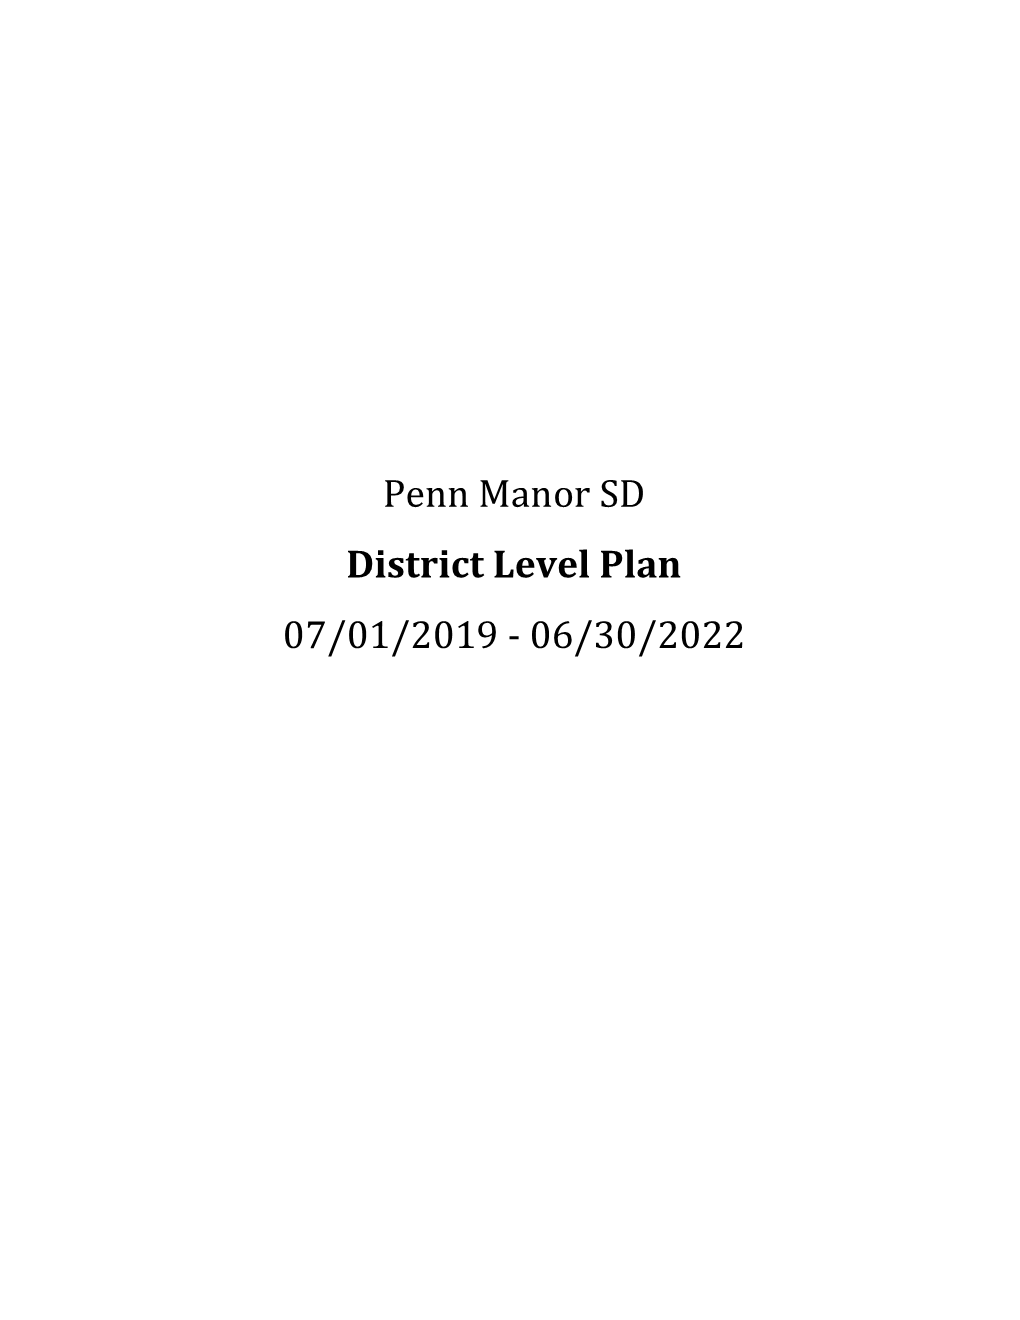 Penn Manor SD District Level Plan 07/01/2019 - 06/30/2022 2